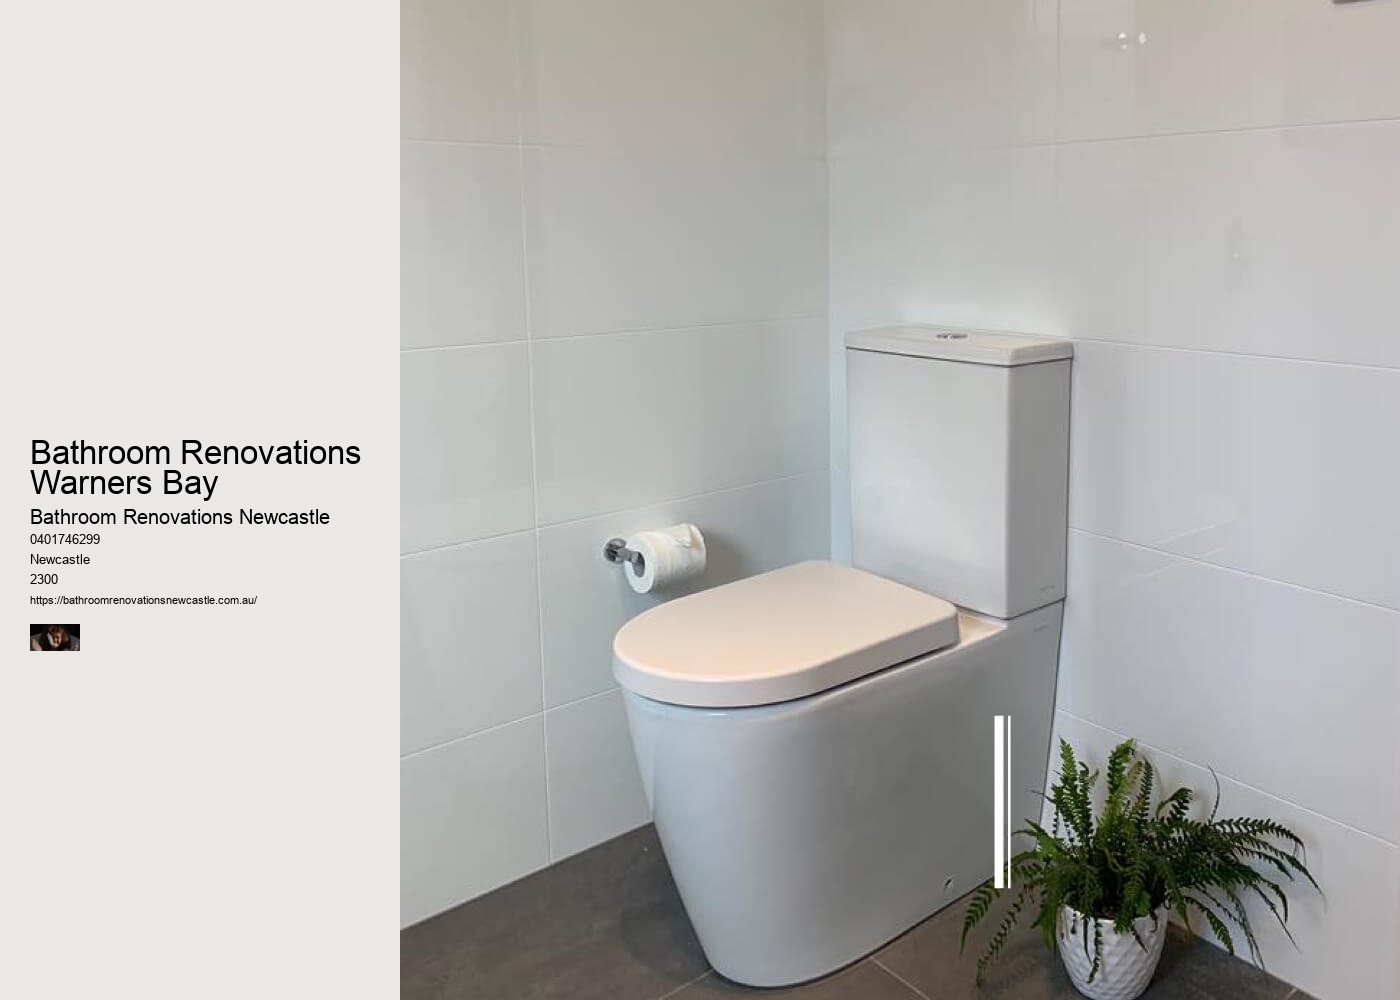 Bathroom Renovations Newcastle NSW